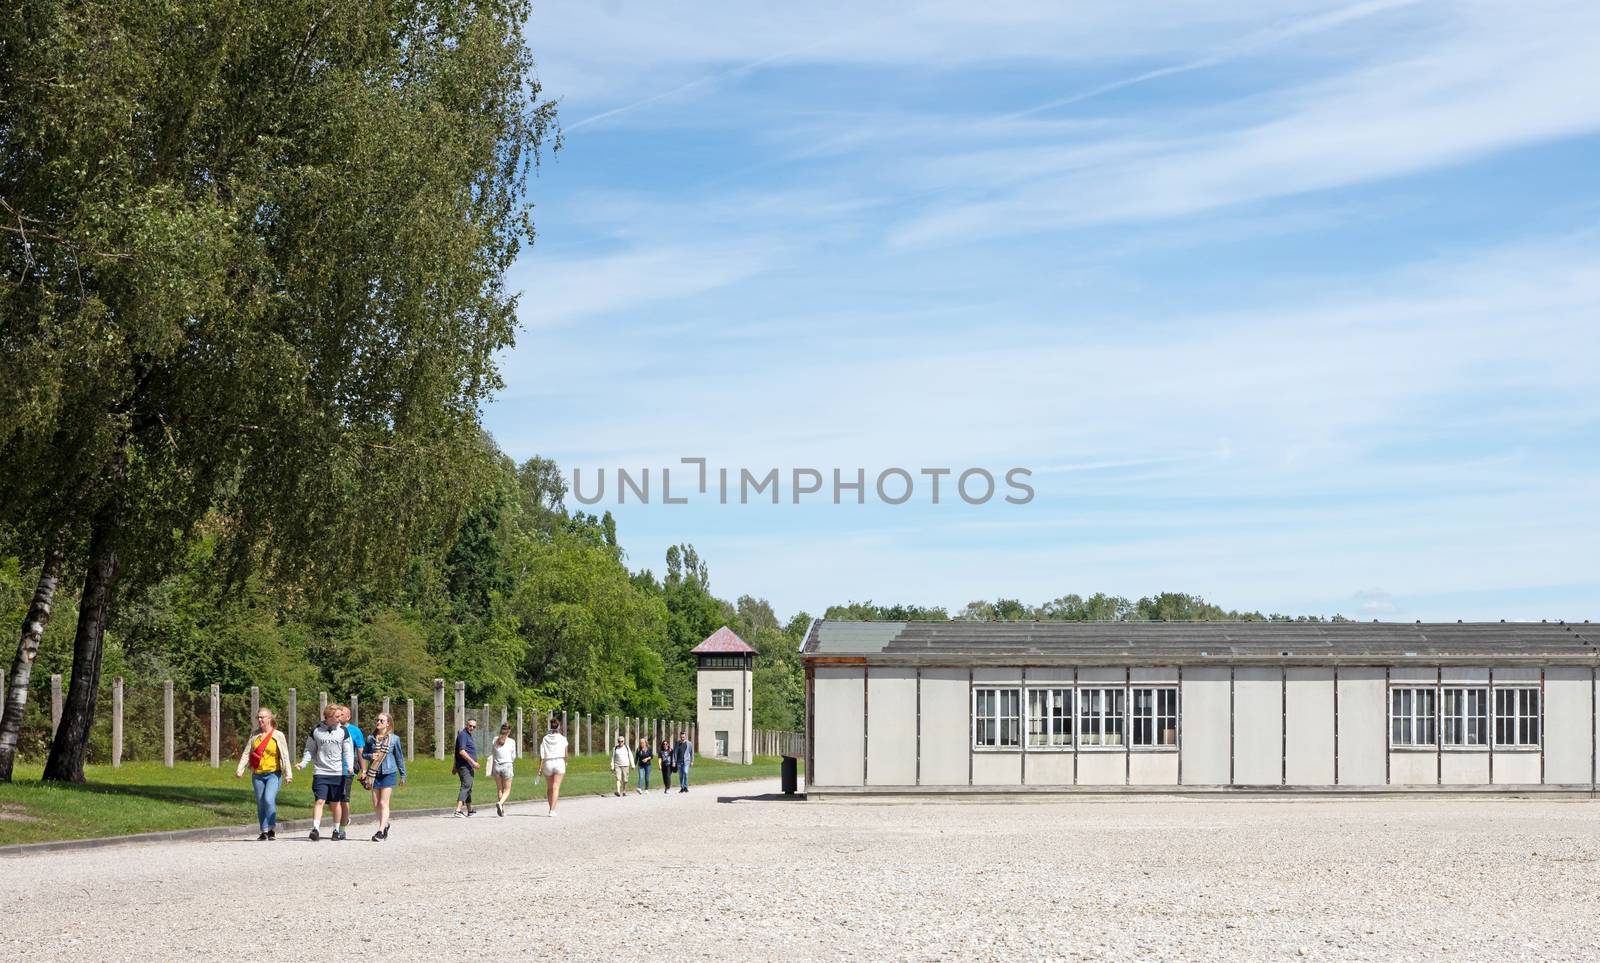 Dachau, Germany - July 13, 2020: Dachau concentration camp, the  by michaklootwijk